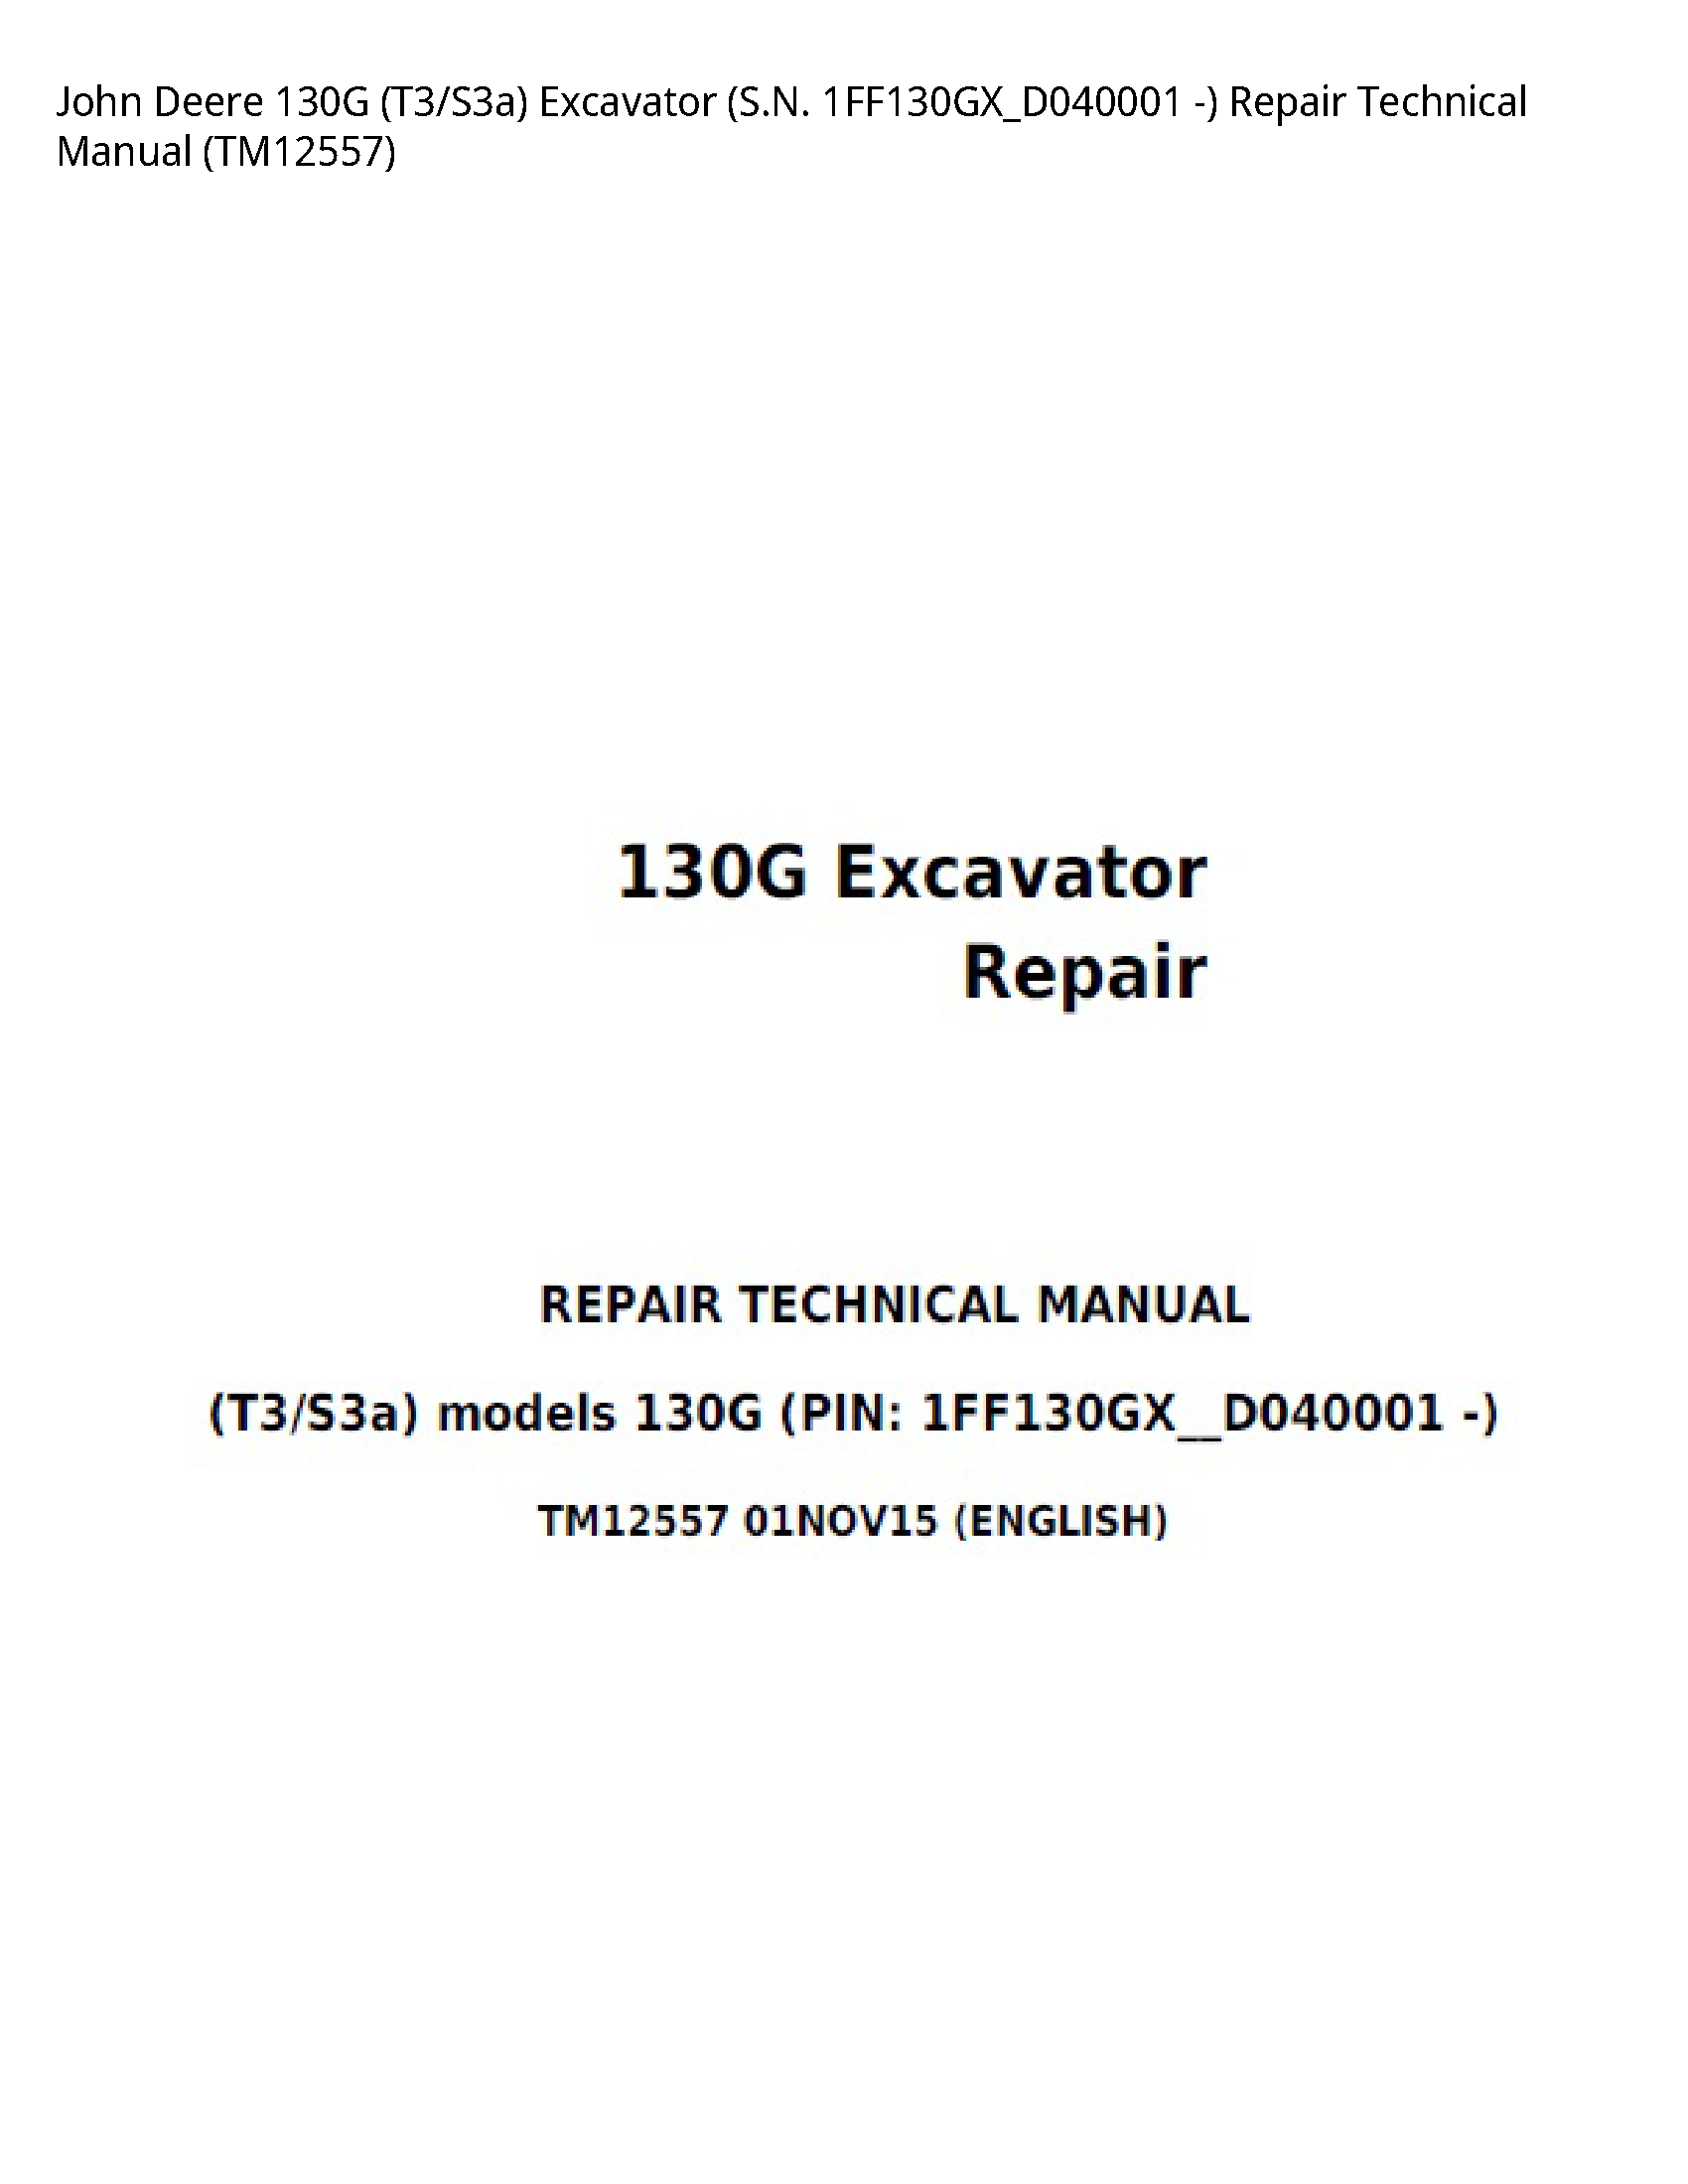 John Deere 130G Excavator S.N. - Repair Technical manual